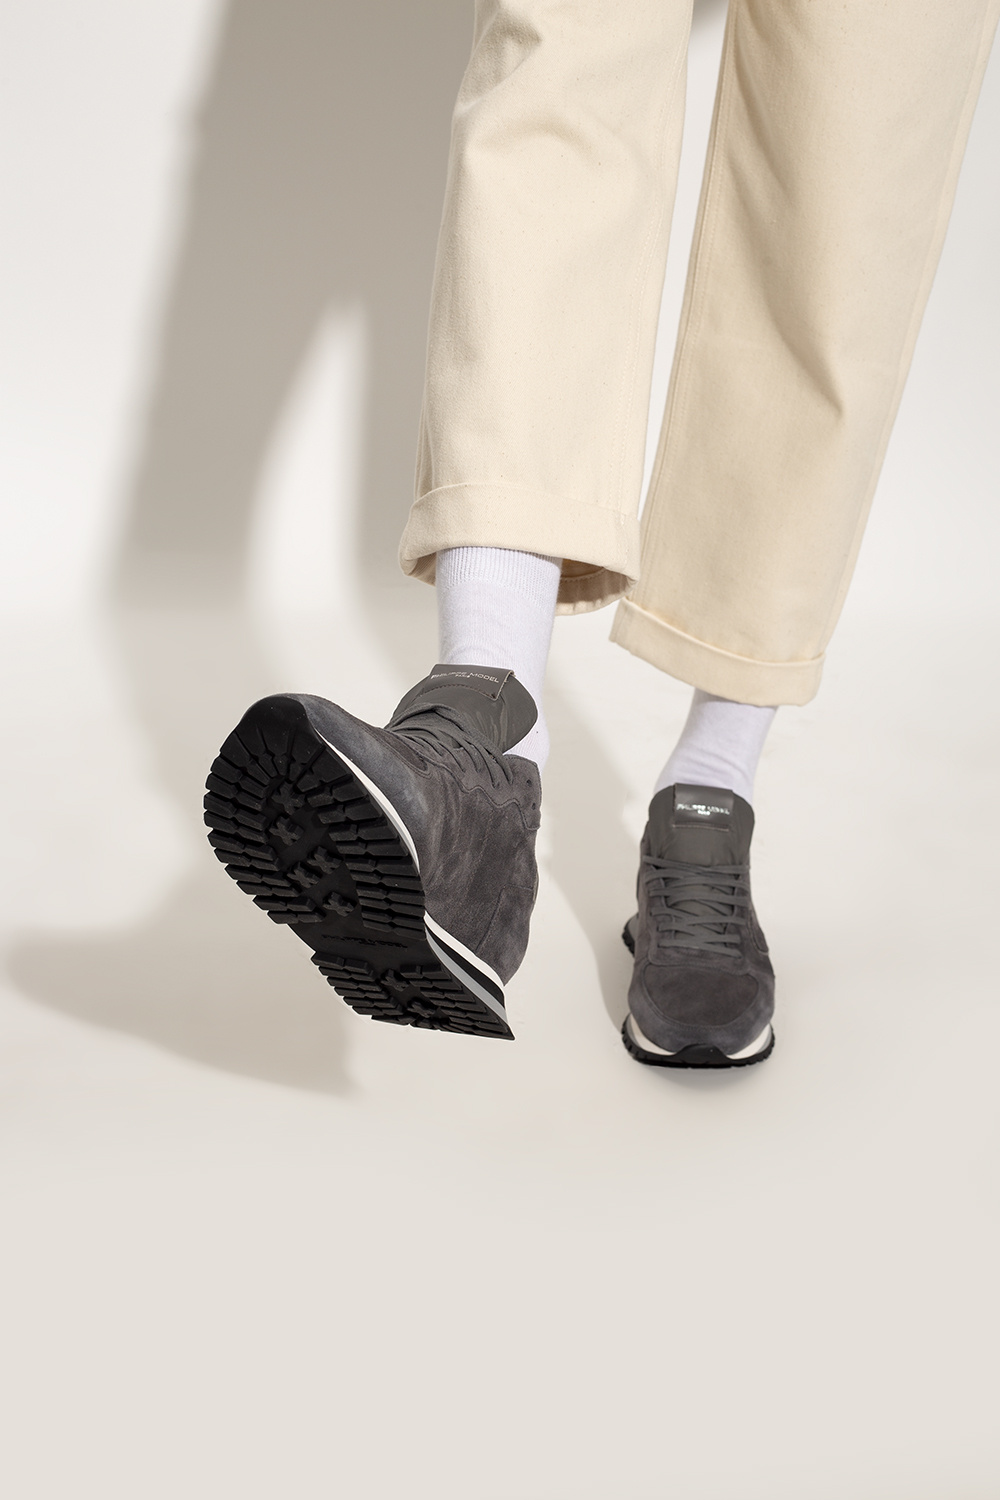 Philippe Model ‘TRPX’ sneakers